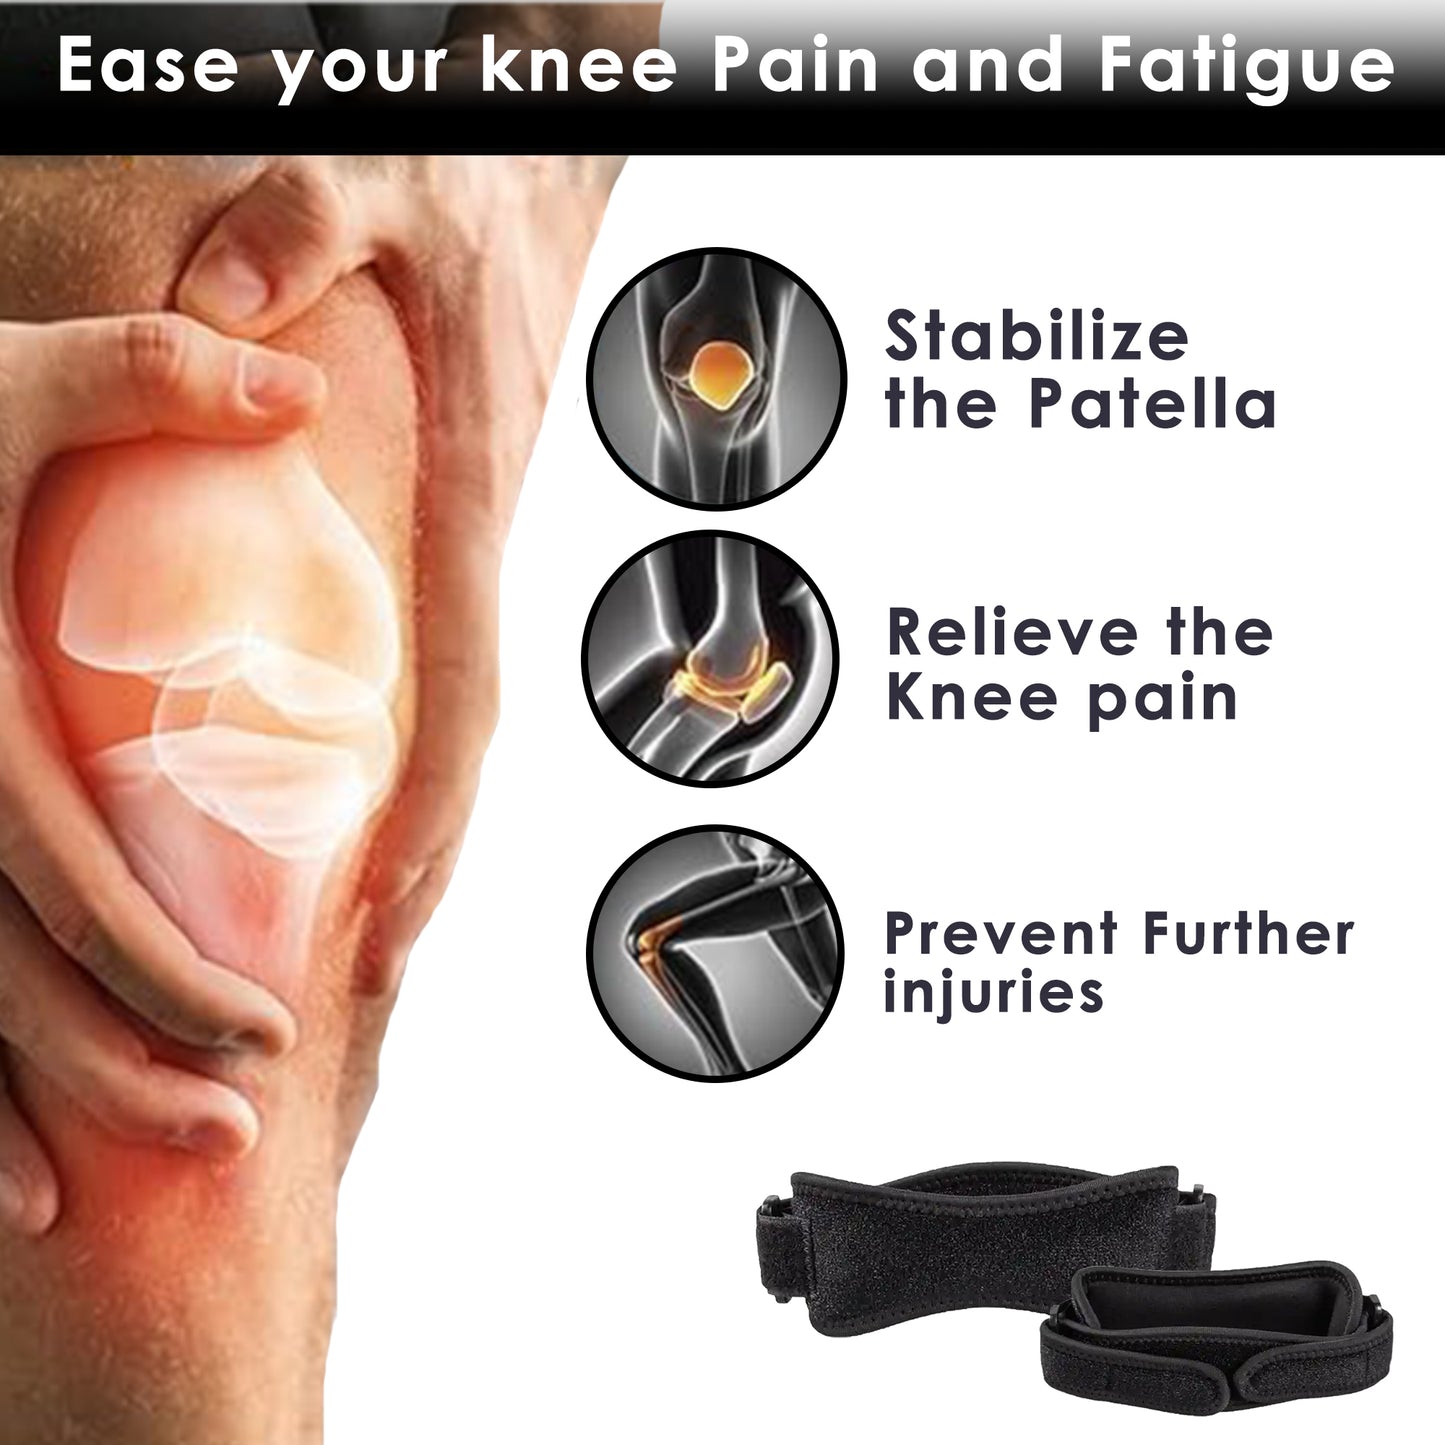 Health benefits of Knee strap